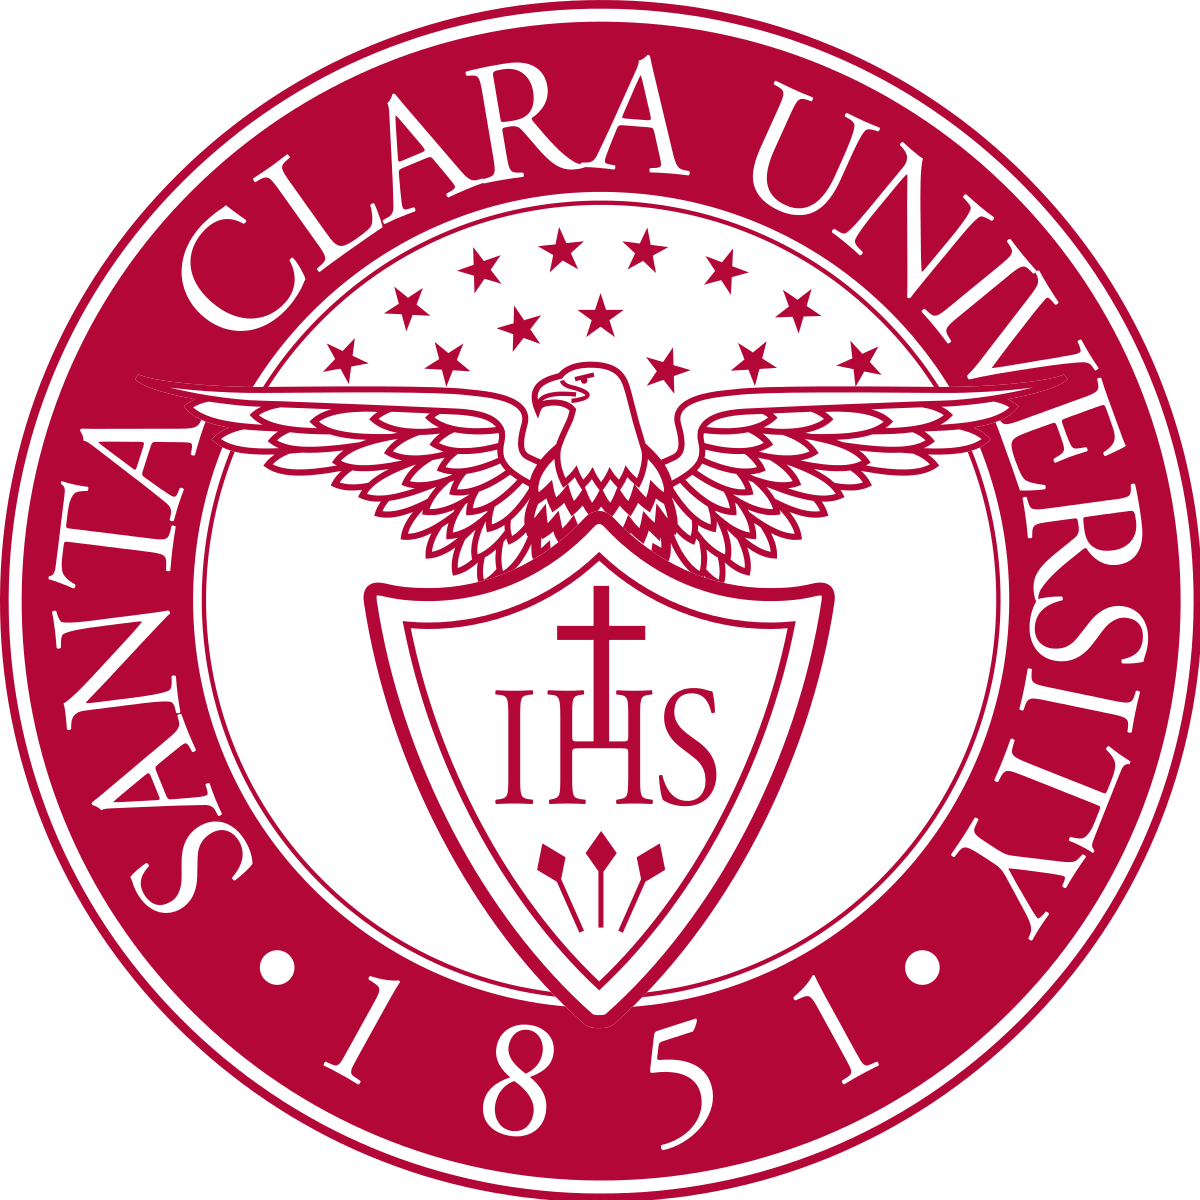 The Santa Clara University Seal